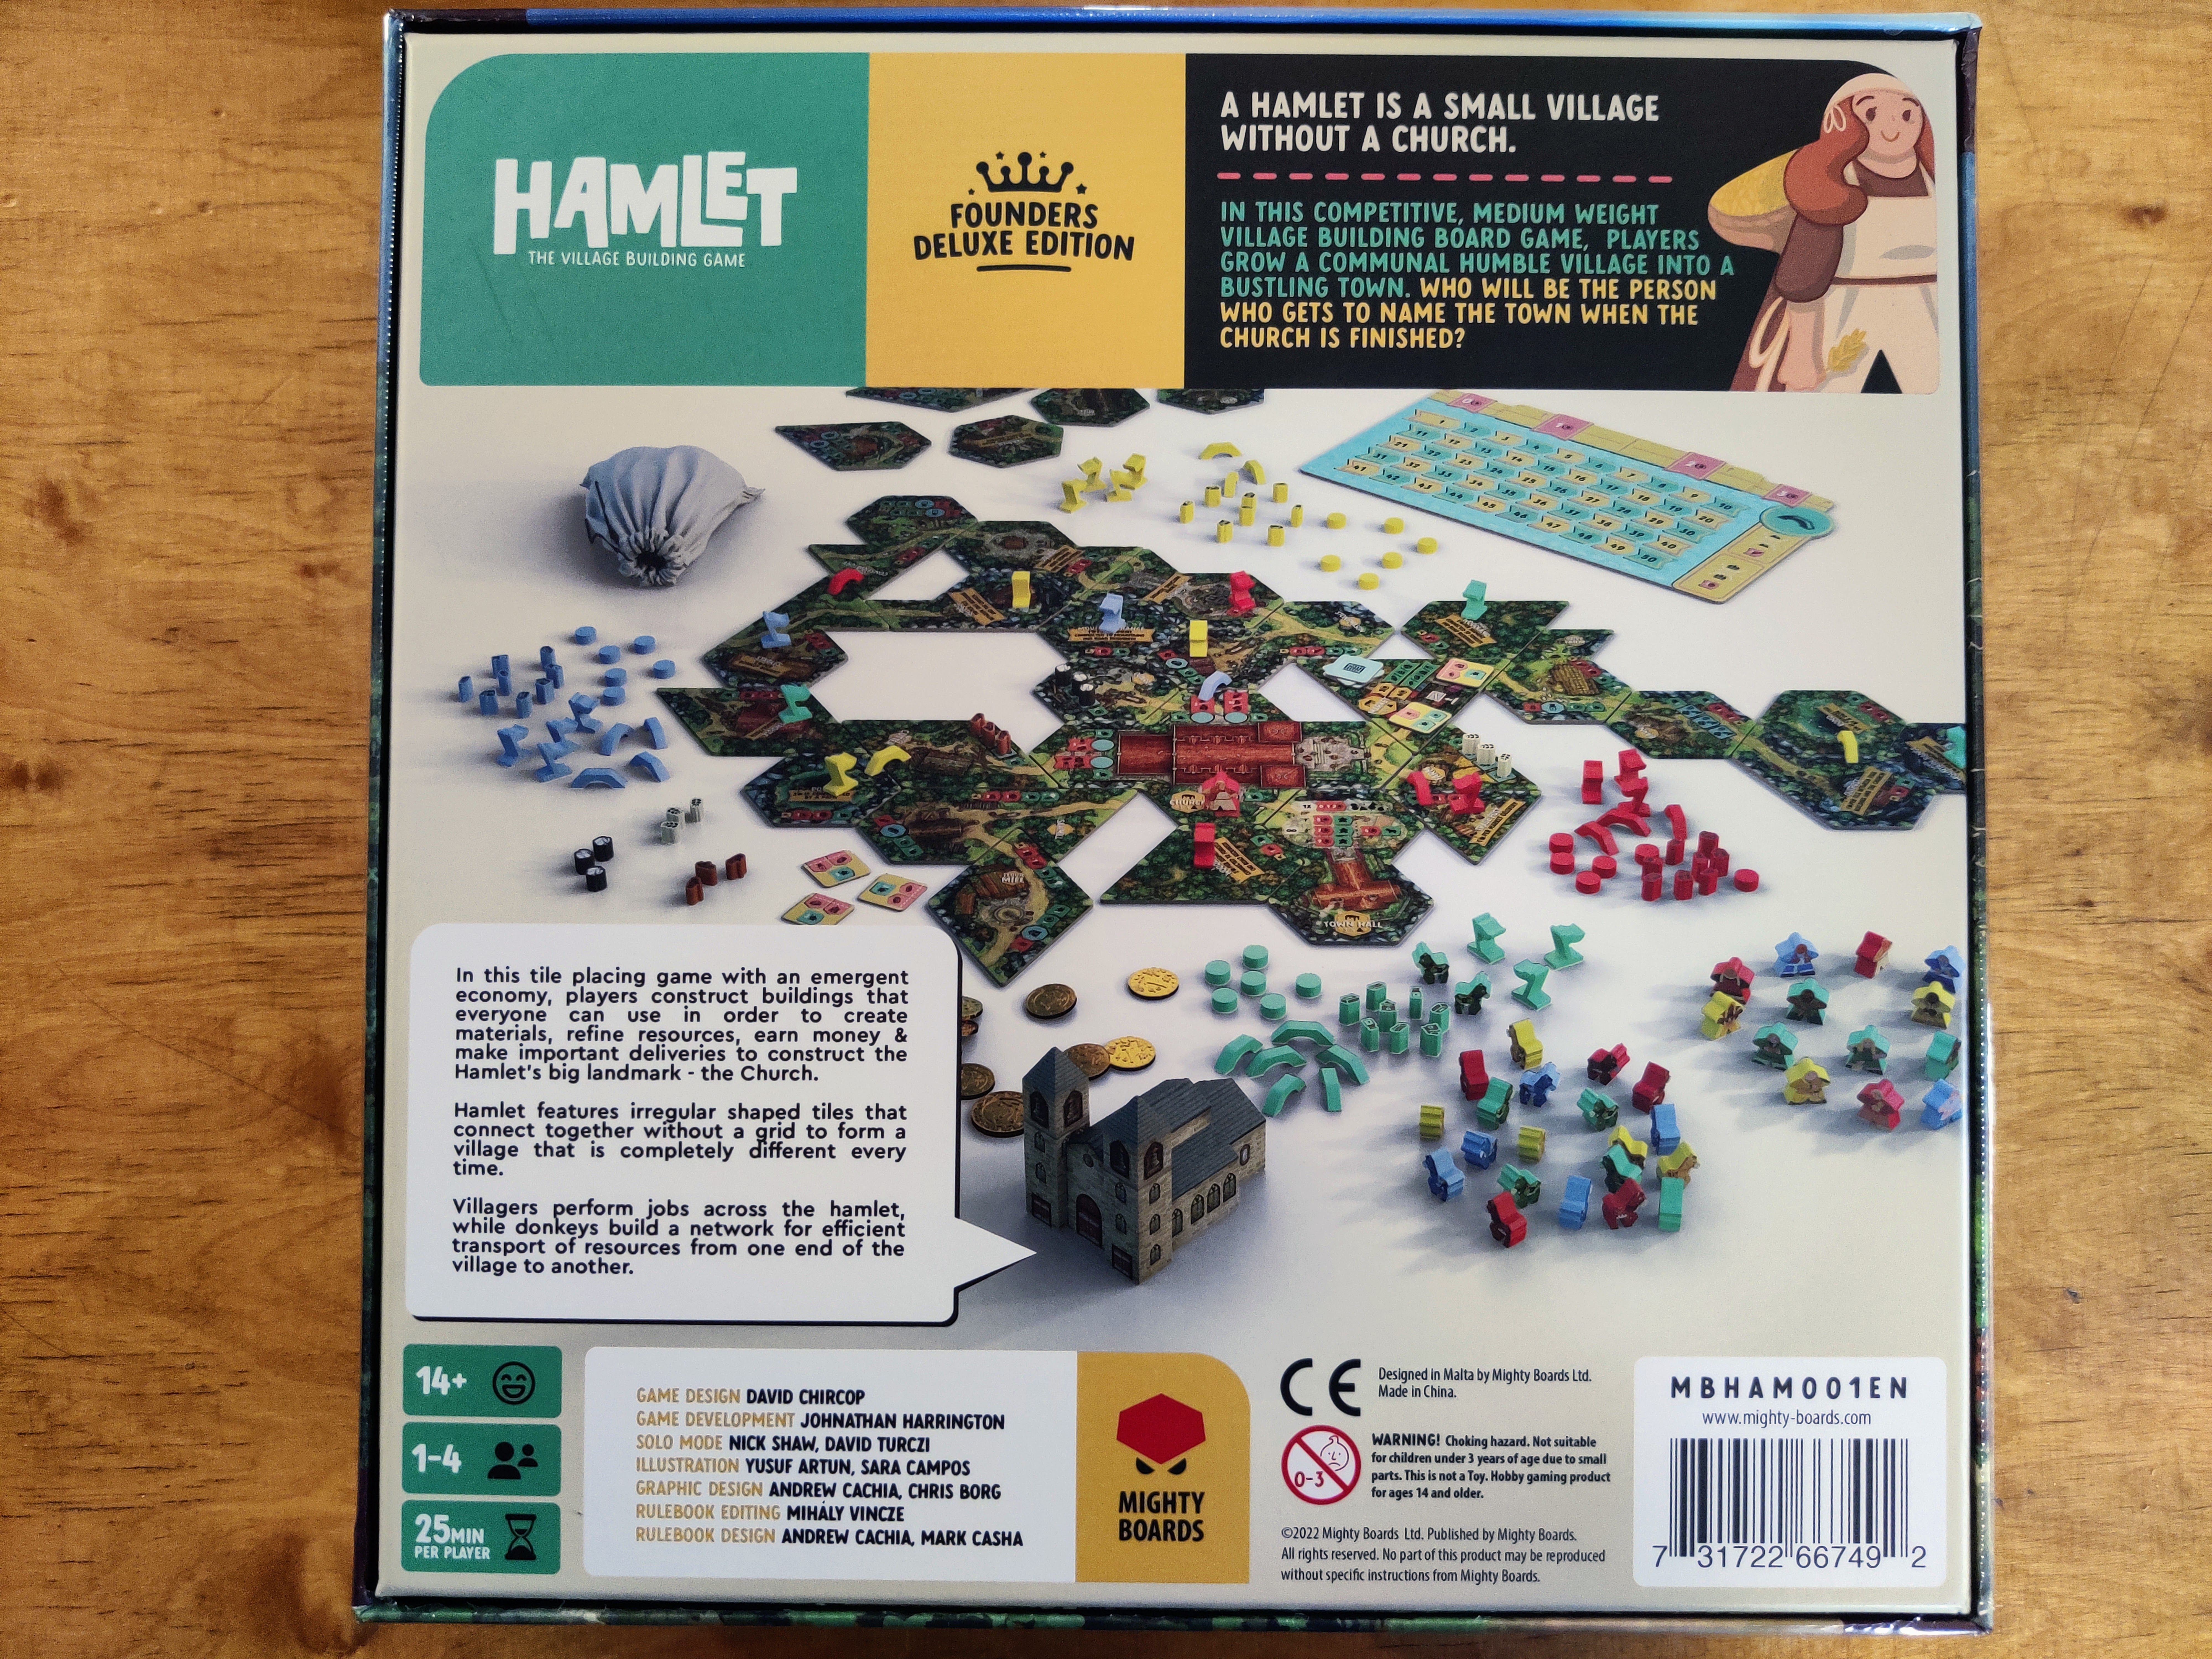 Hamlet: The Village Building Game | Image | BoardGameGeek